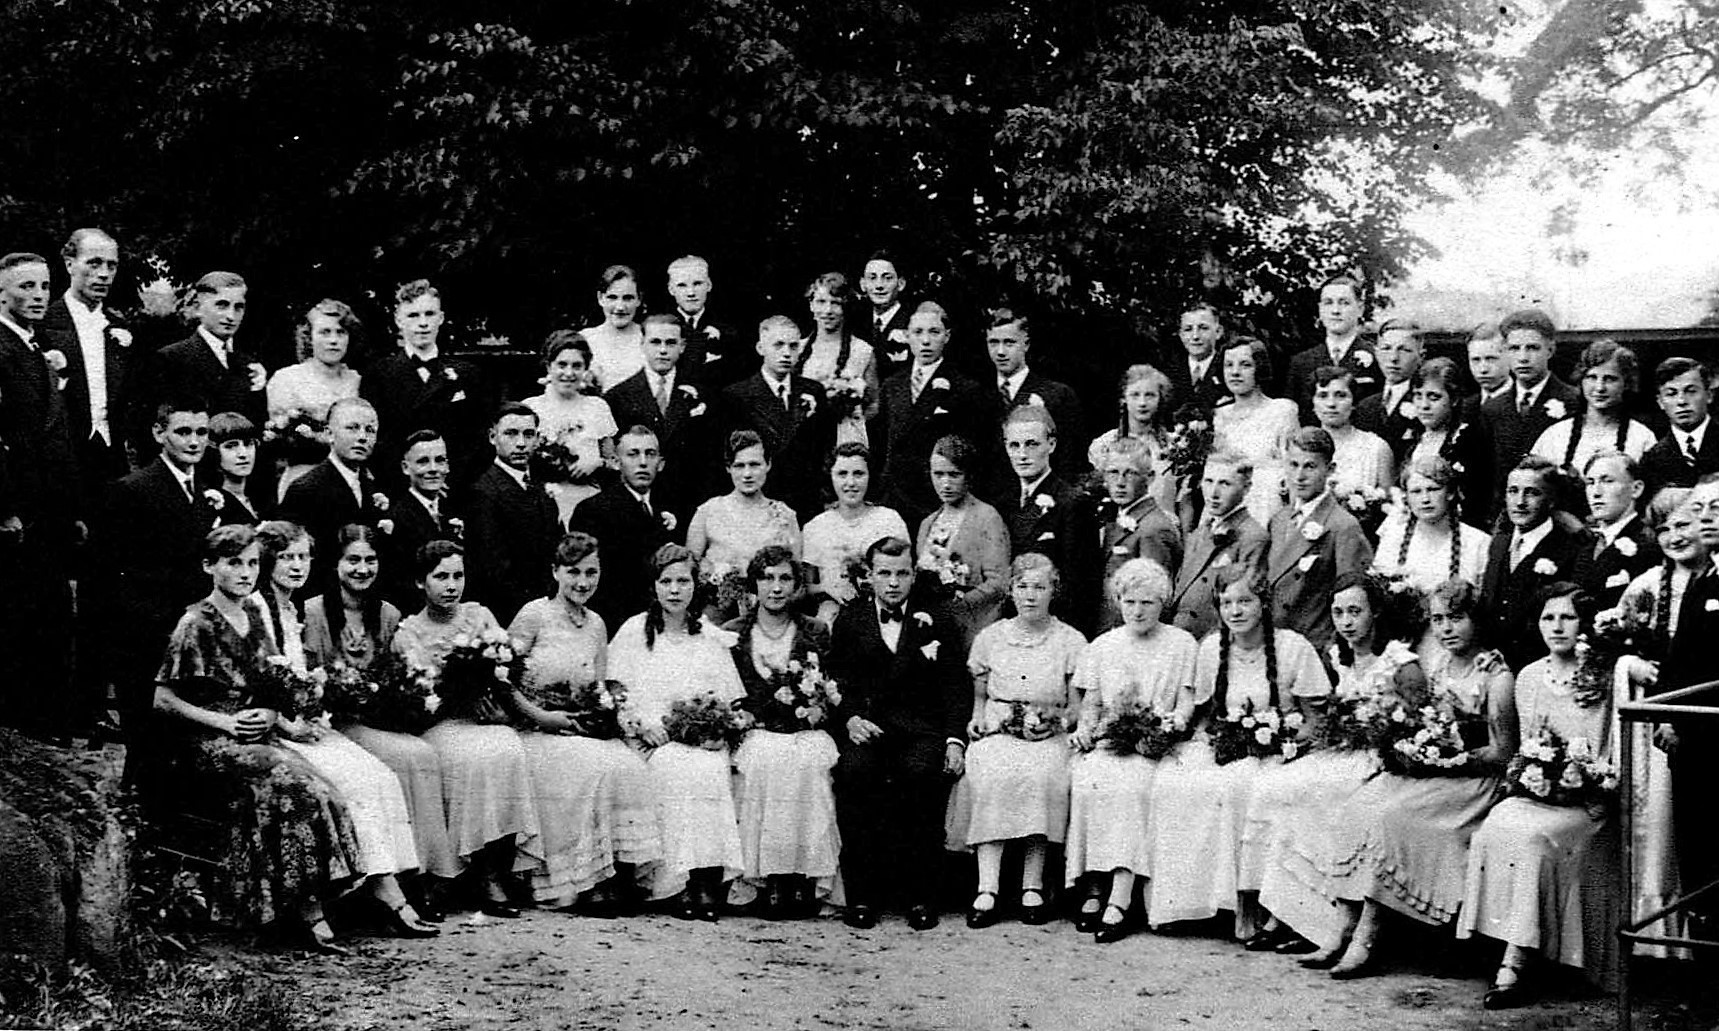 Foto-Sammlung Adolf Krapp, Ordner 10: Tanzschule Wyand, 1930 (Museumsgesellschaft Bad Dürkheim e.V. CC BY-NC-SA)